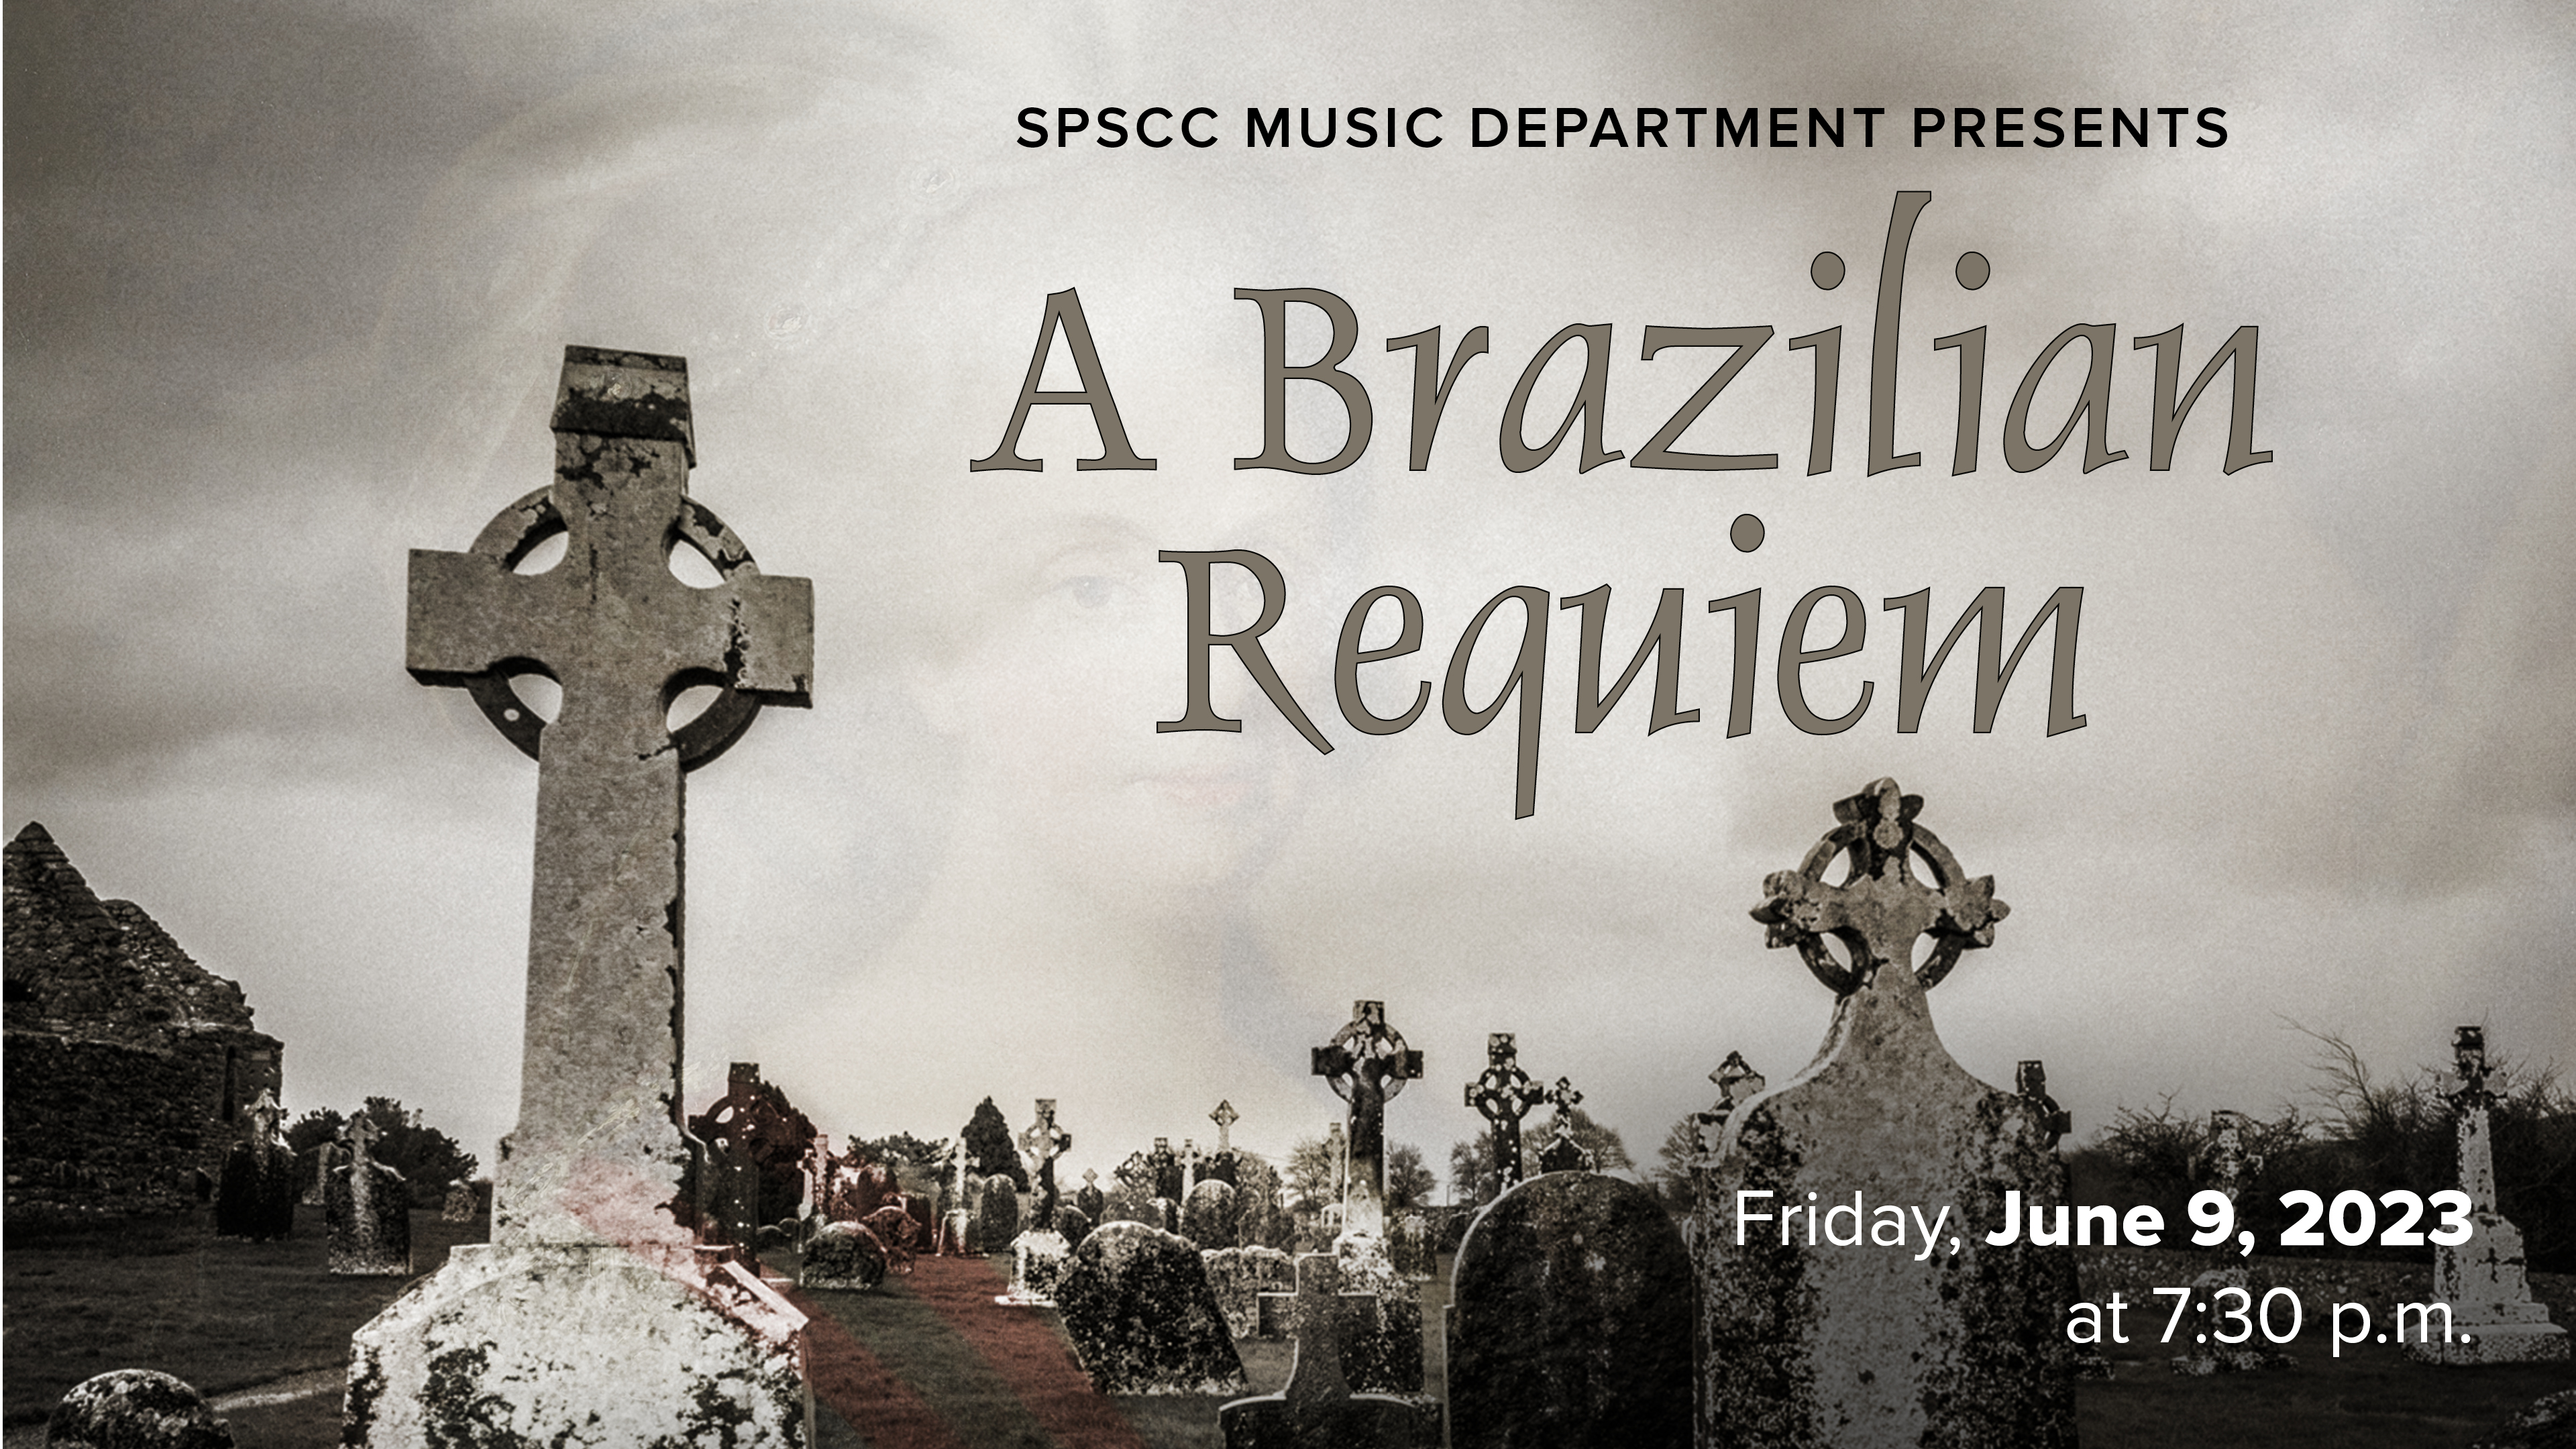 SPSCC Music Department presents "A Brazilian Requiem" on Friday, June 9, 2023 at 7:30 p.m.